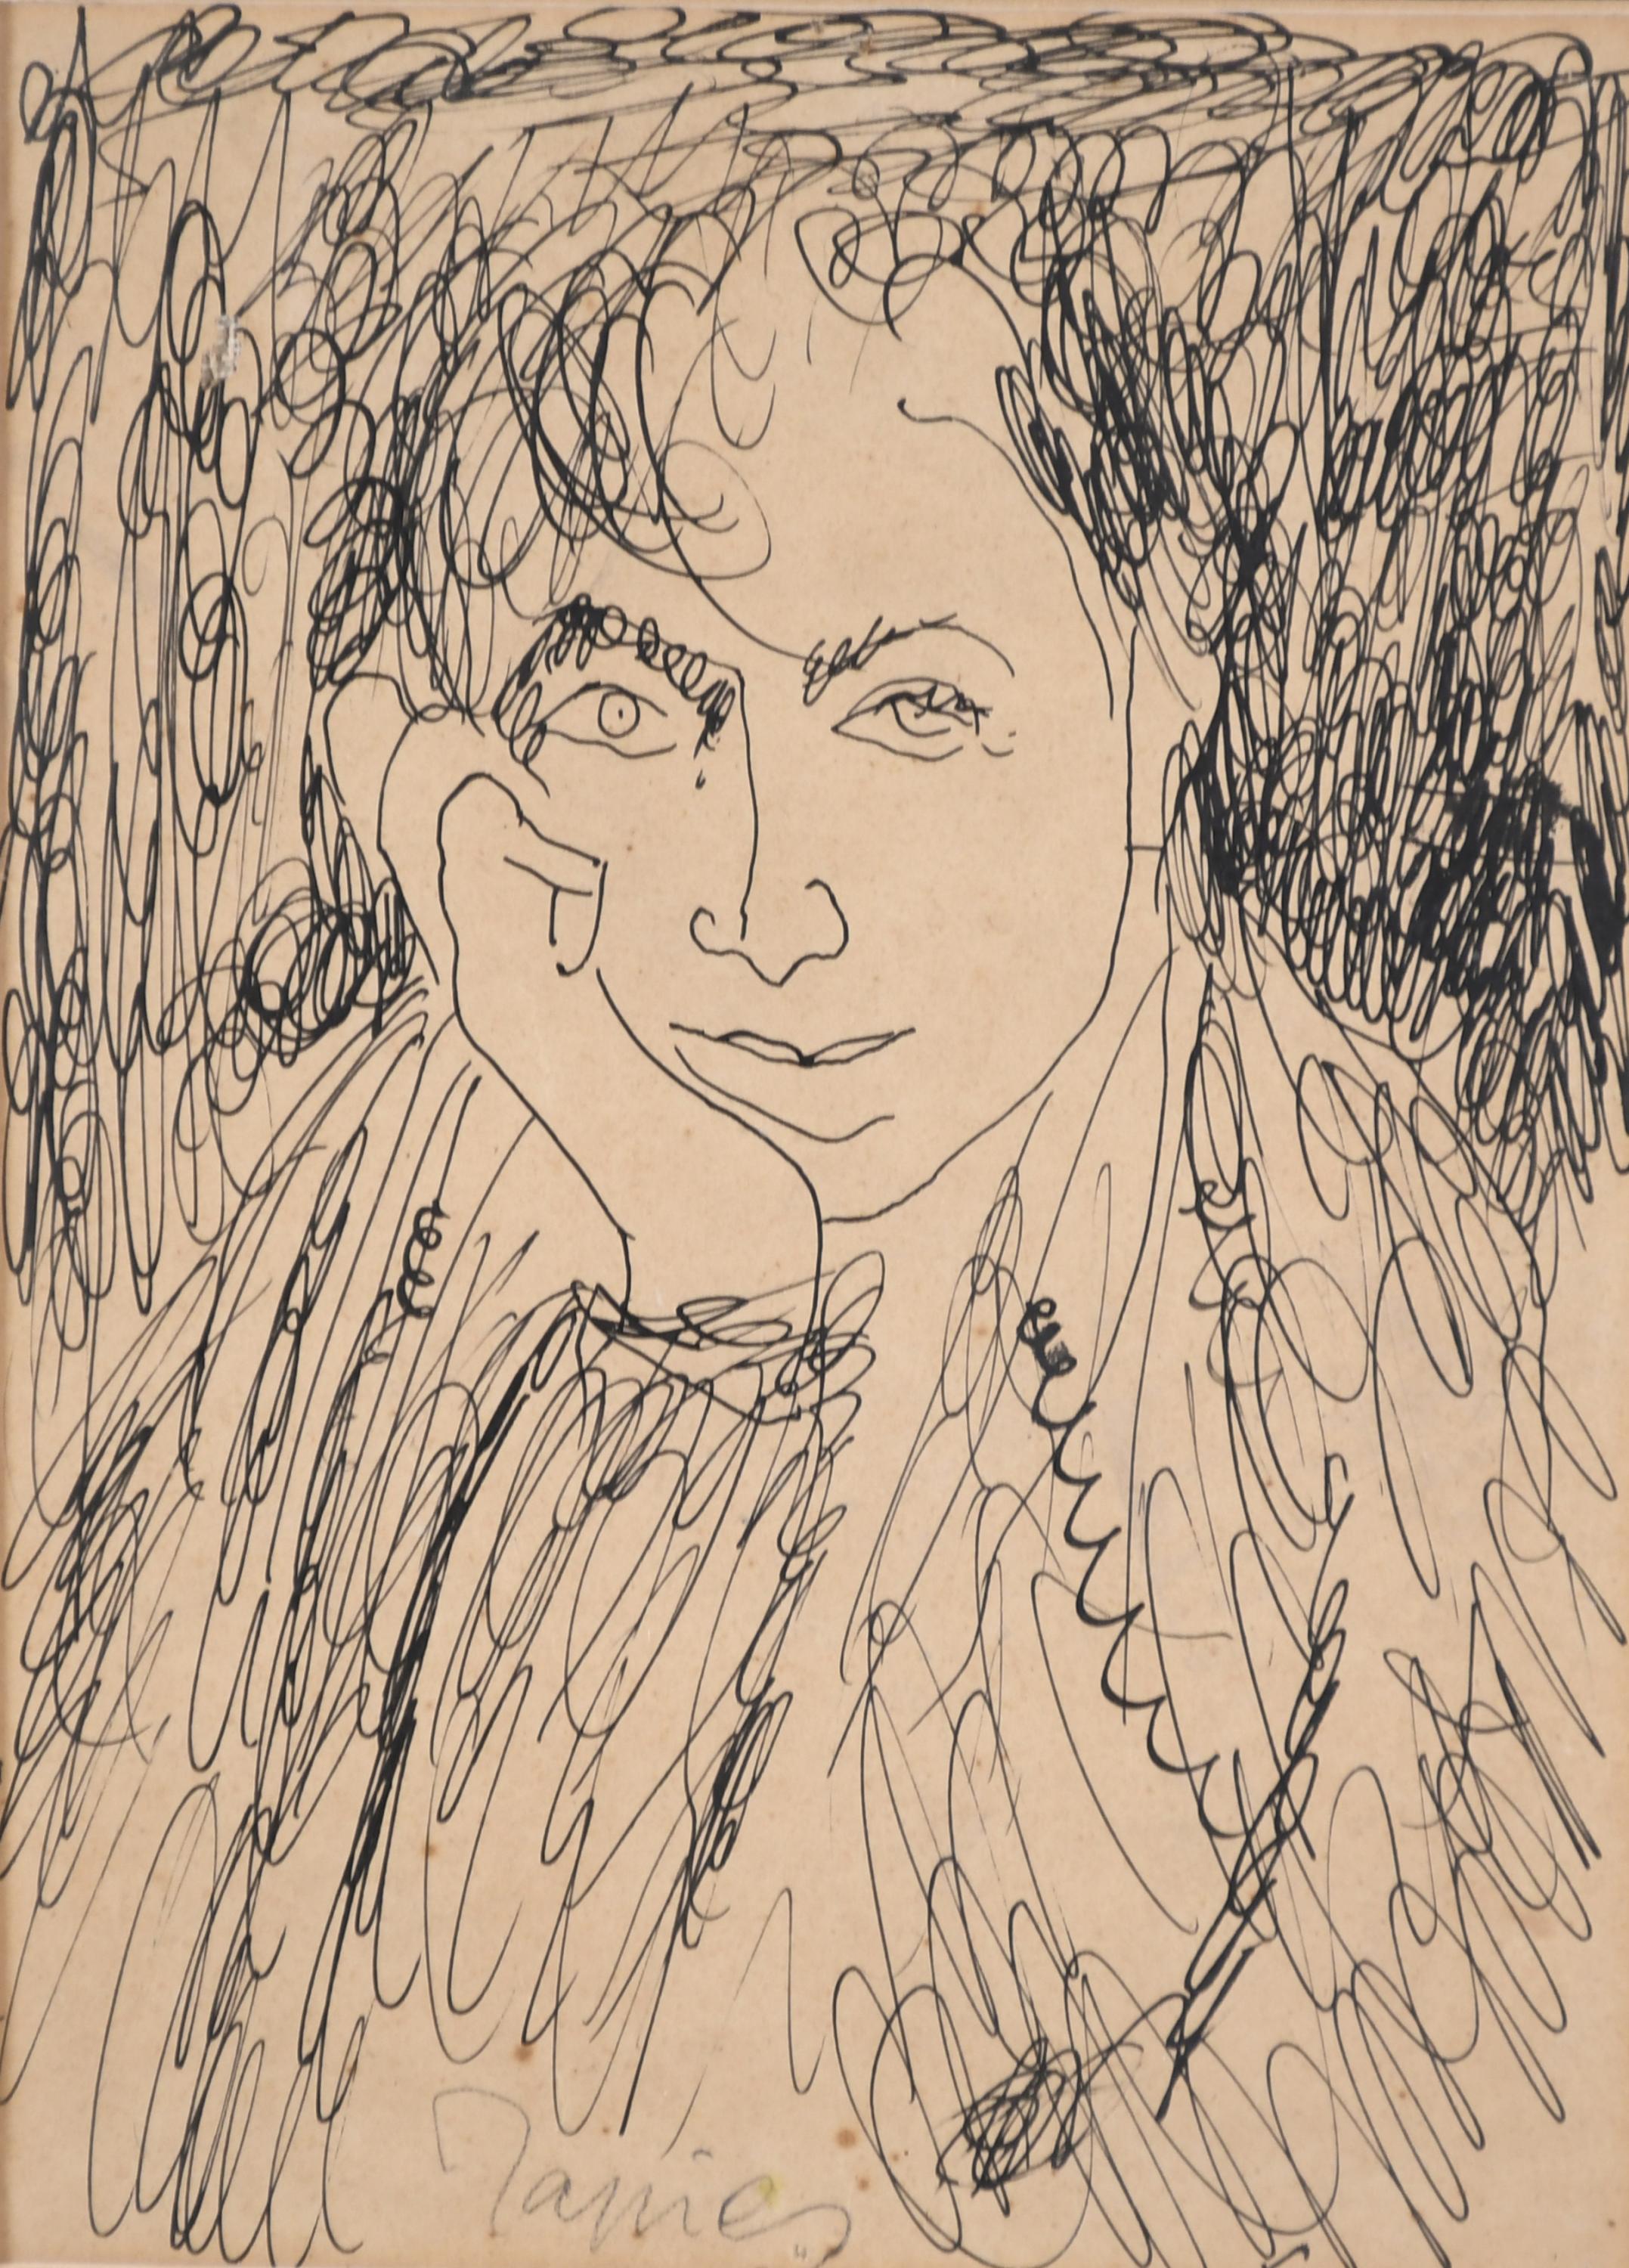 ANTONI TÀPIES (1923-2012). "SELF-PORTRAIT", 1947.